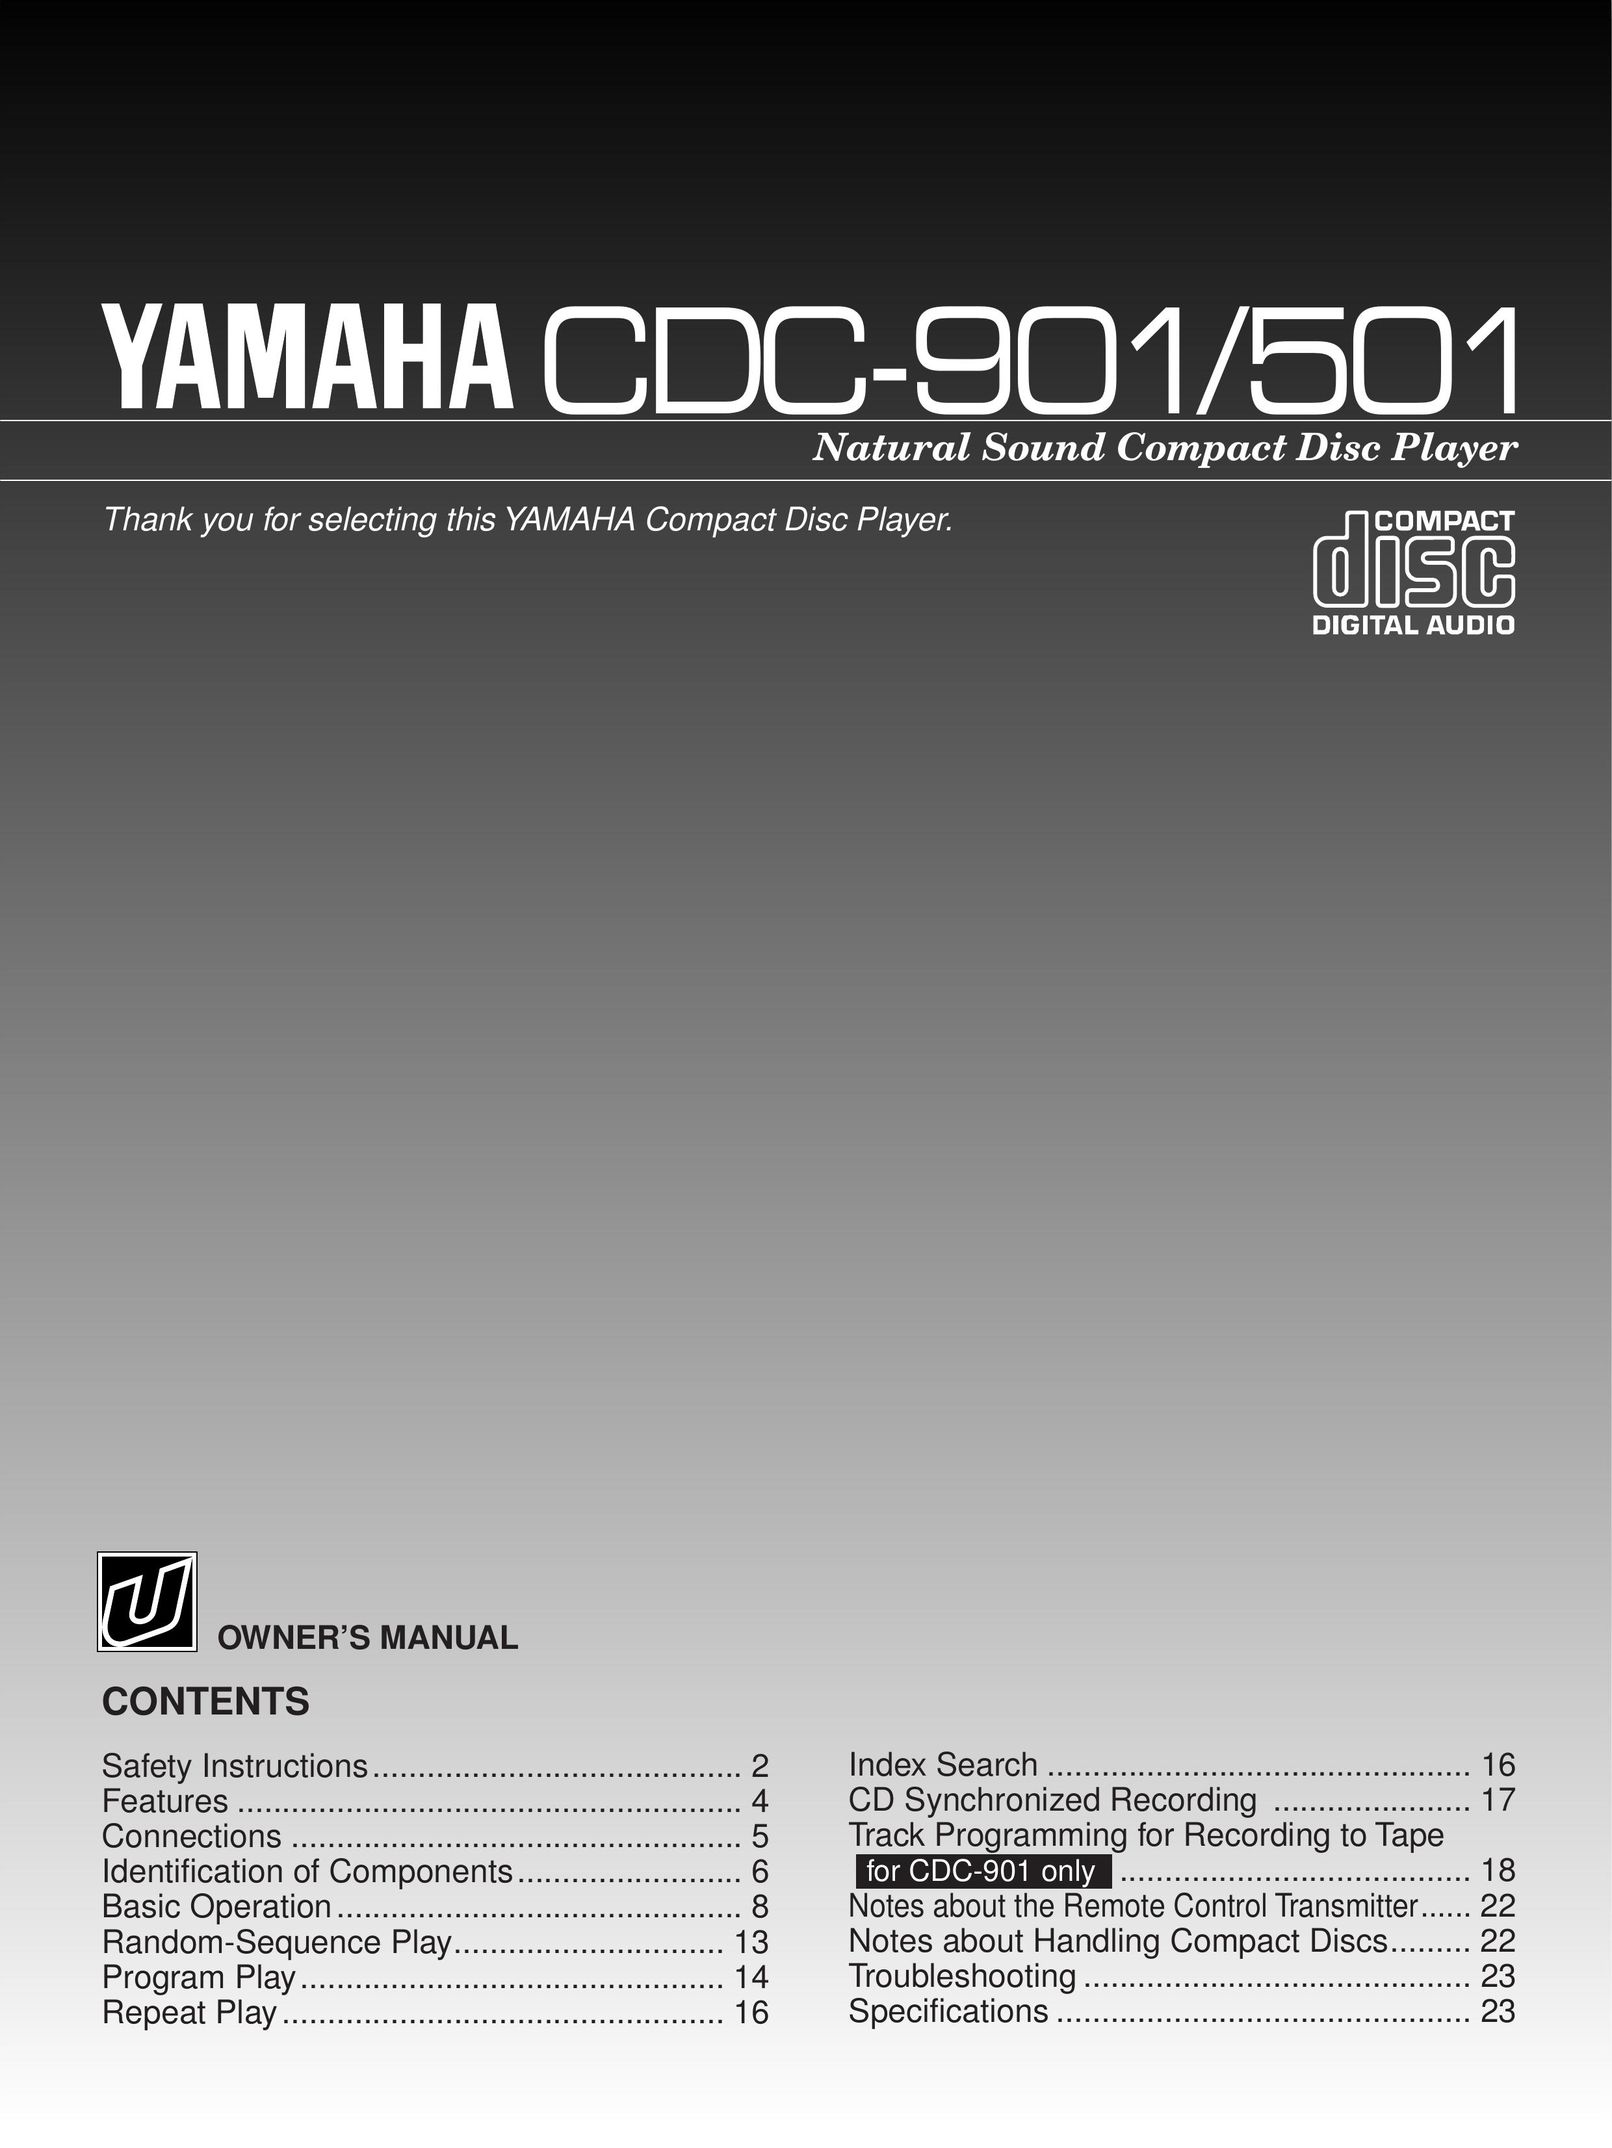 Yamaha CDC-901 Stereo System User Manual